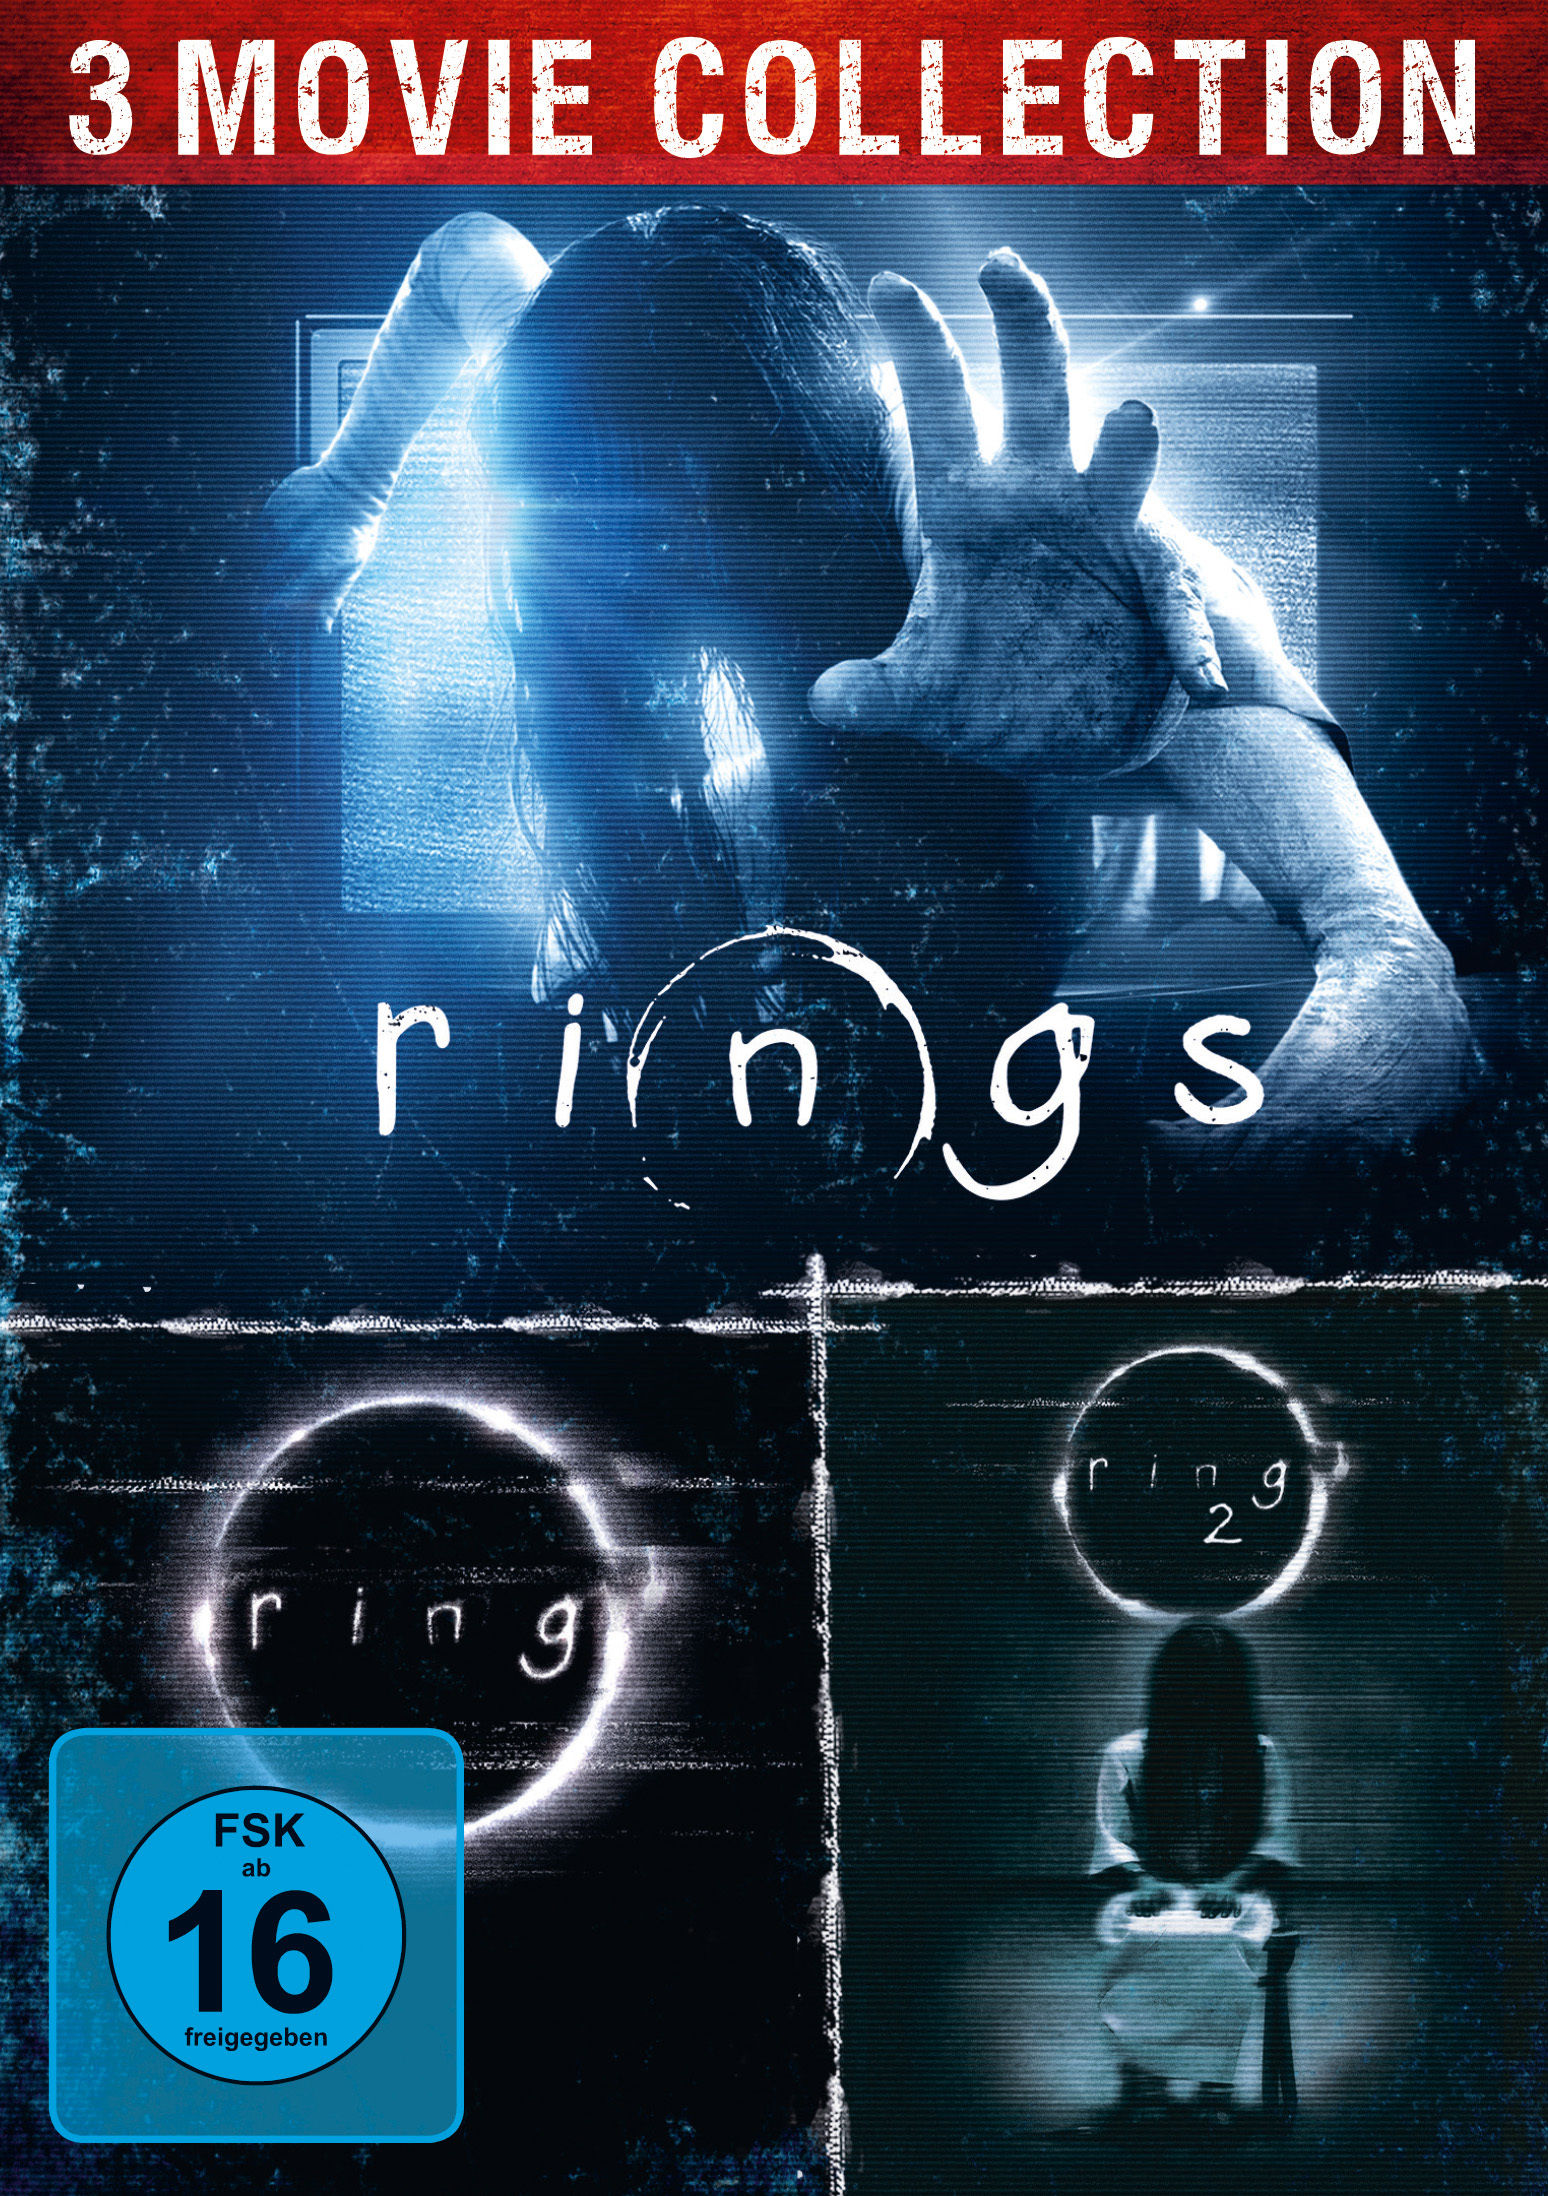 The Ring (DVD, 2003, Widescreen) 667068998023 | eBay